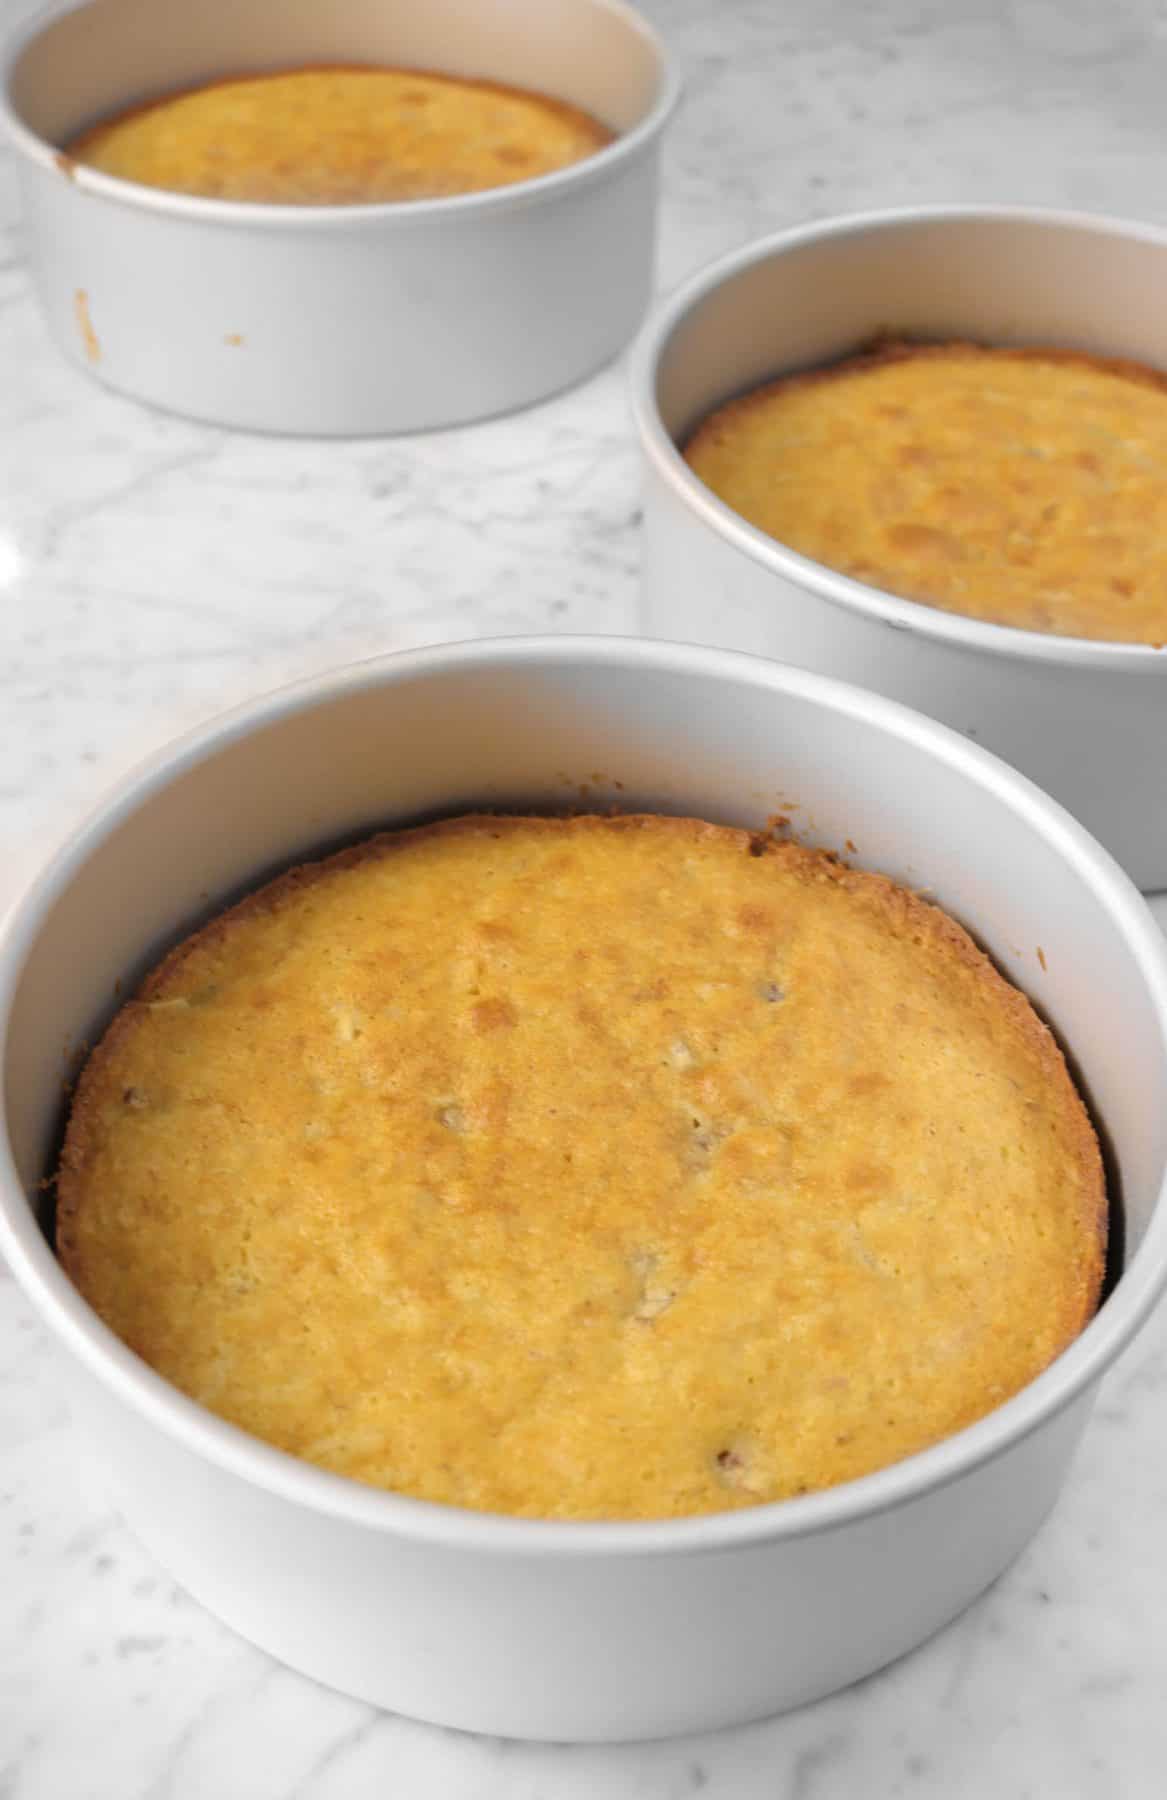 italian cream cake baked in round cake pans